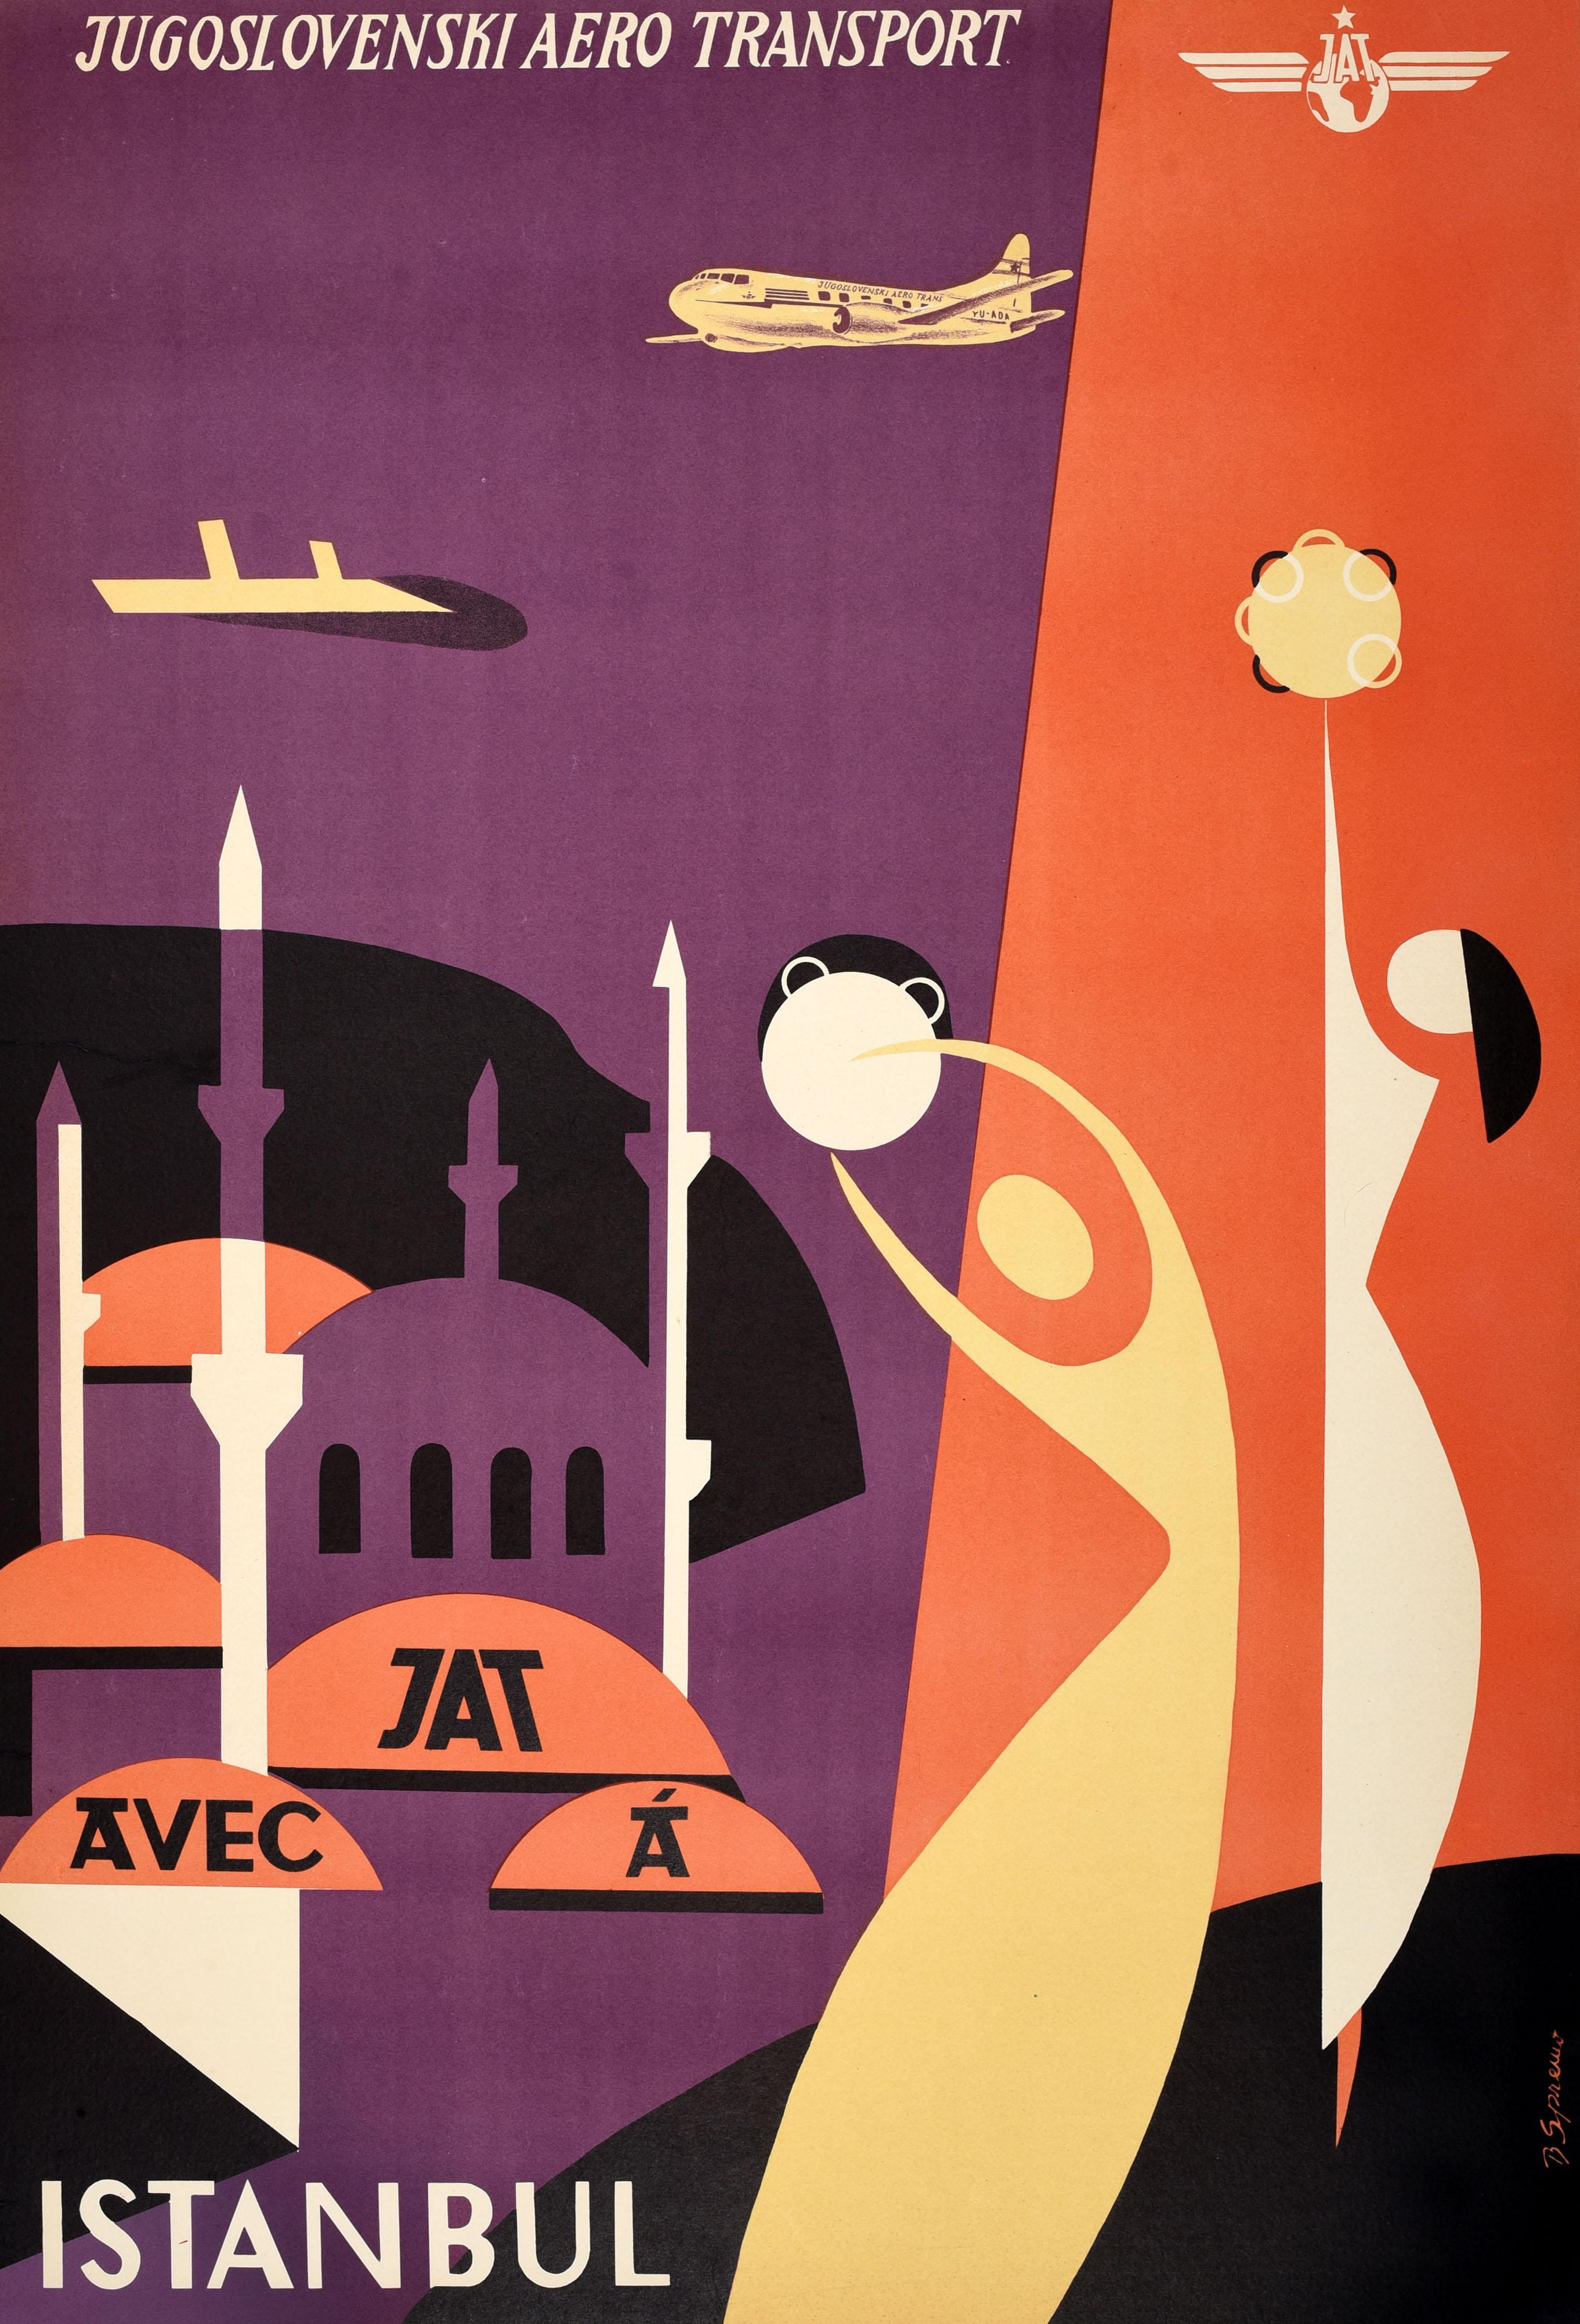 Original vintage Turkey travel poster - Jugoslovenski Aero Transport avec JAT a Istanbul / Yugoslav Aero Transport with JAT to Istanbul - featuring a colourful purple and orange graphic design depicting two ladies as silhouette figures on one side